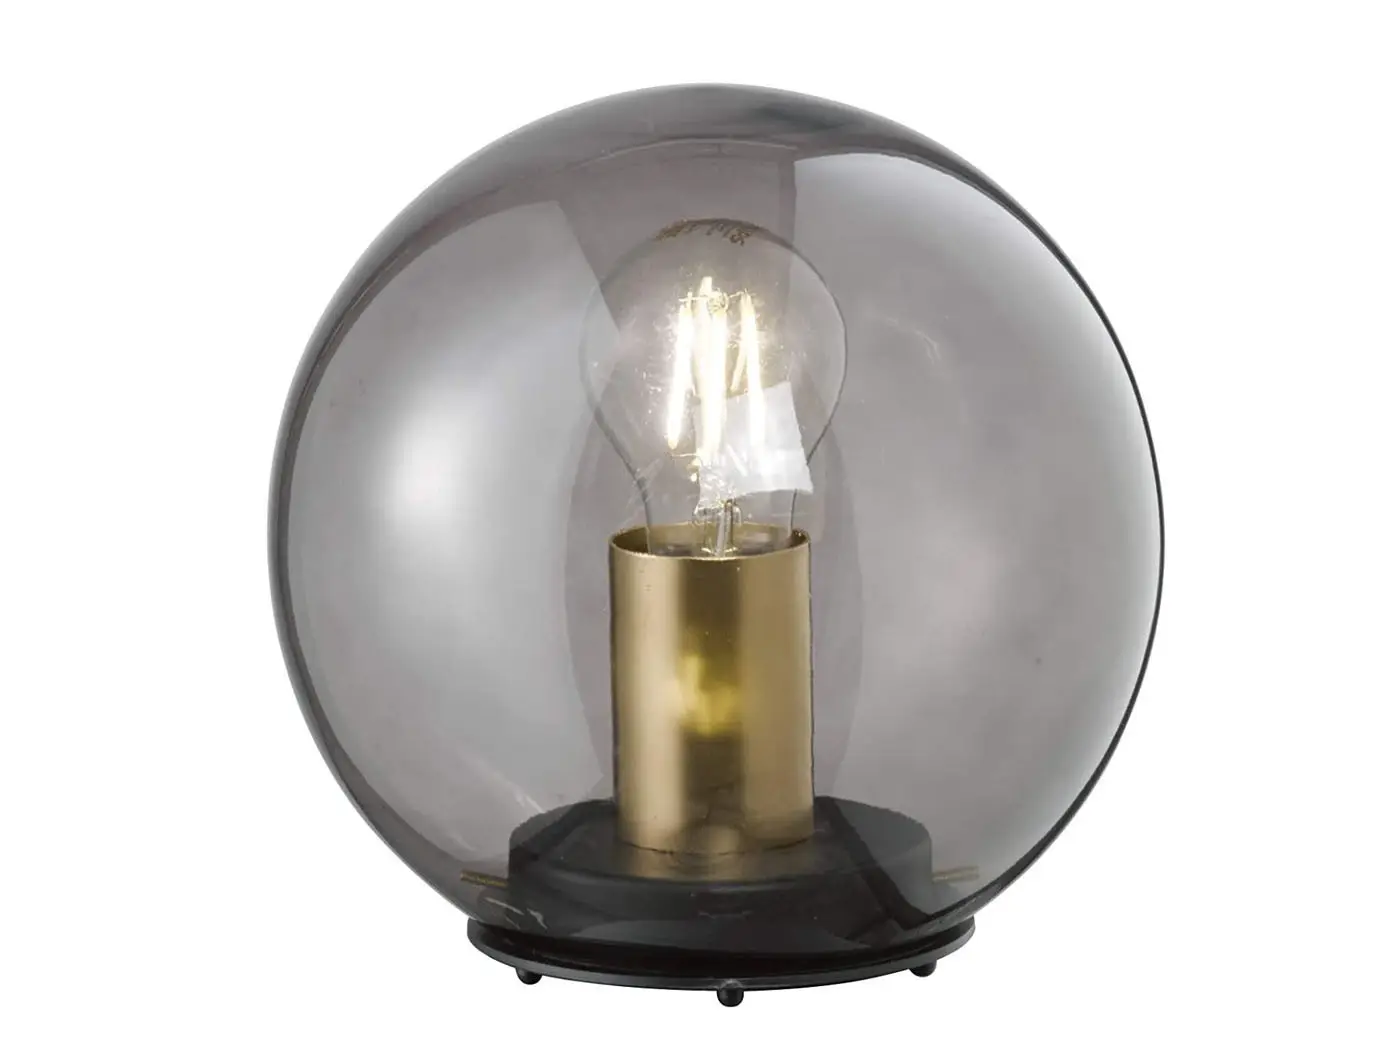 Tischlampe Kugel Lampenschirm Rauchglas